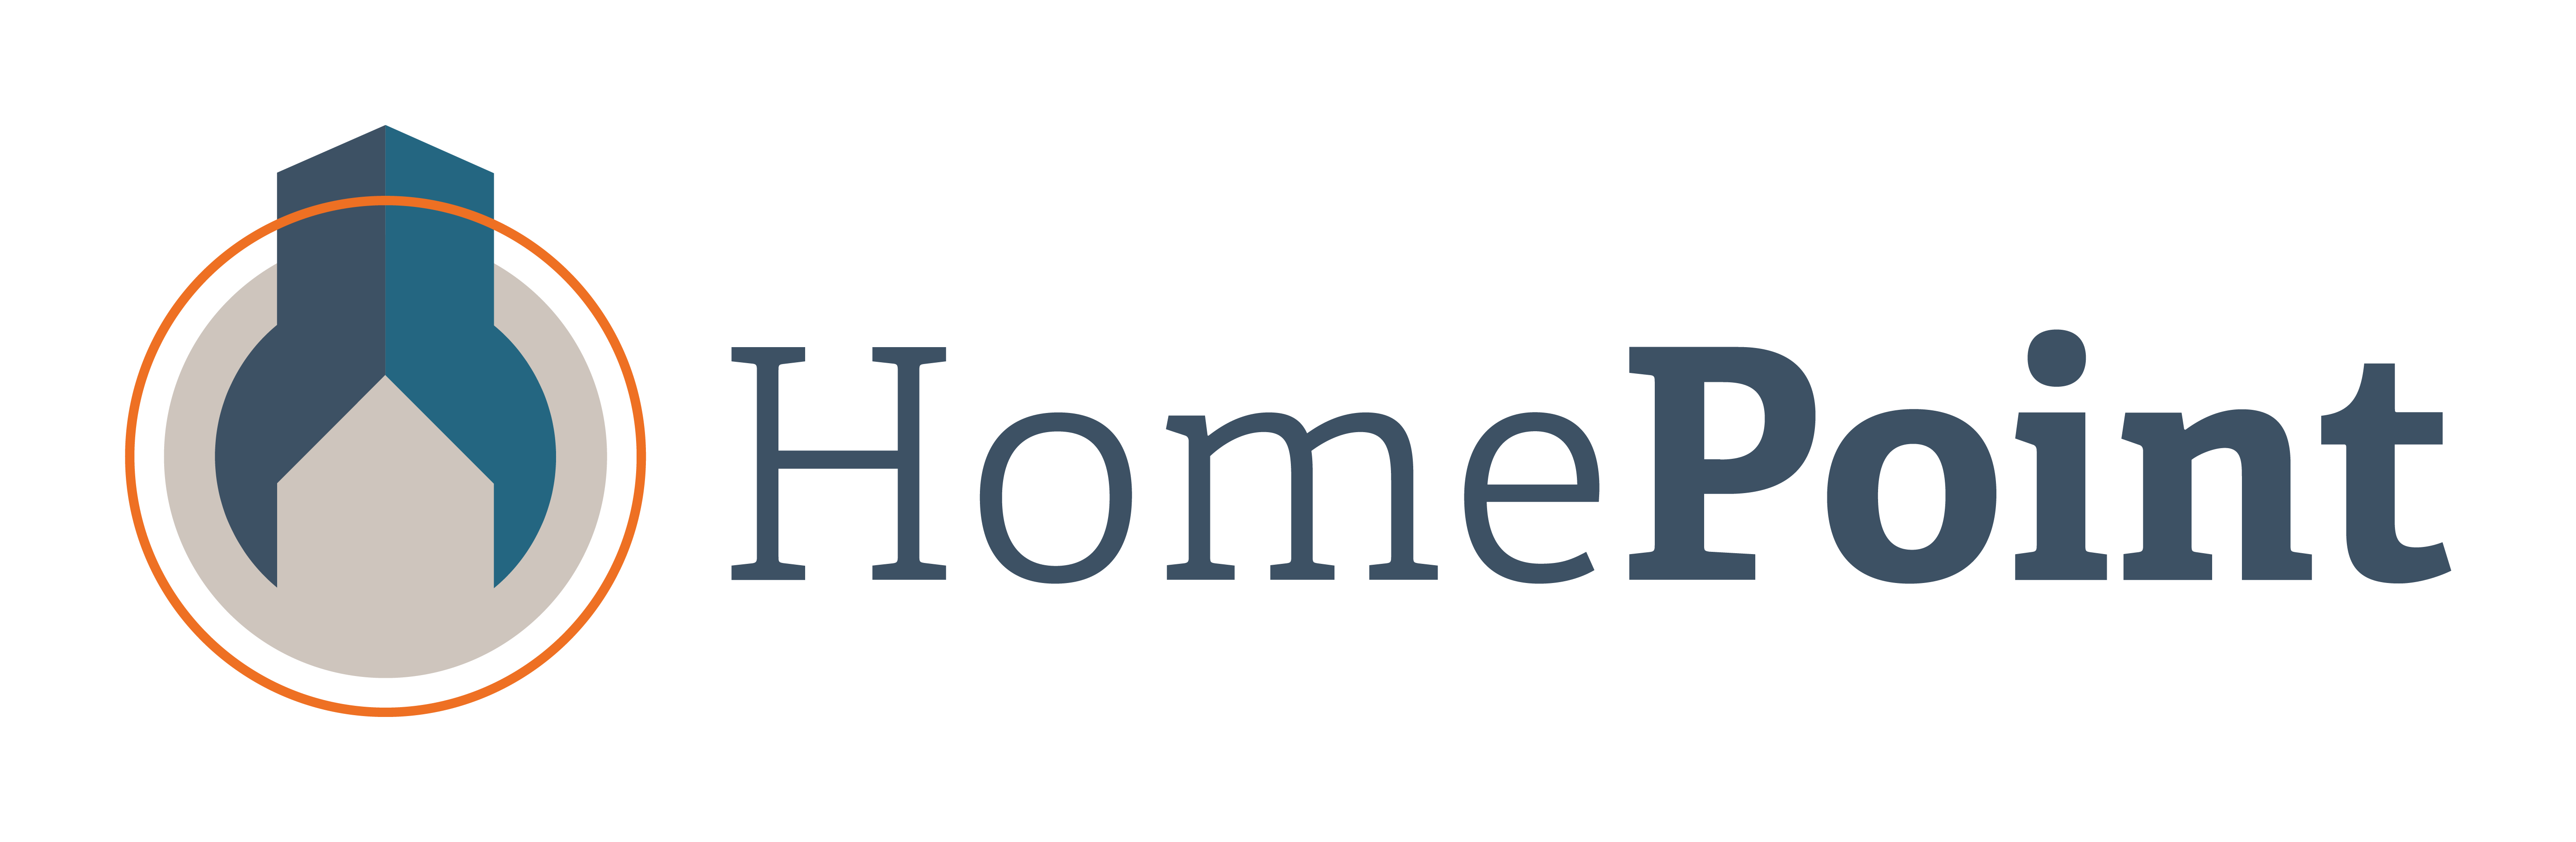 Homepoint-Logo-Web_Horizontal-1.png